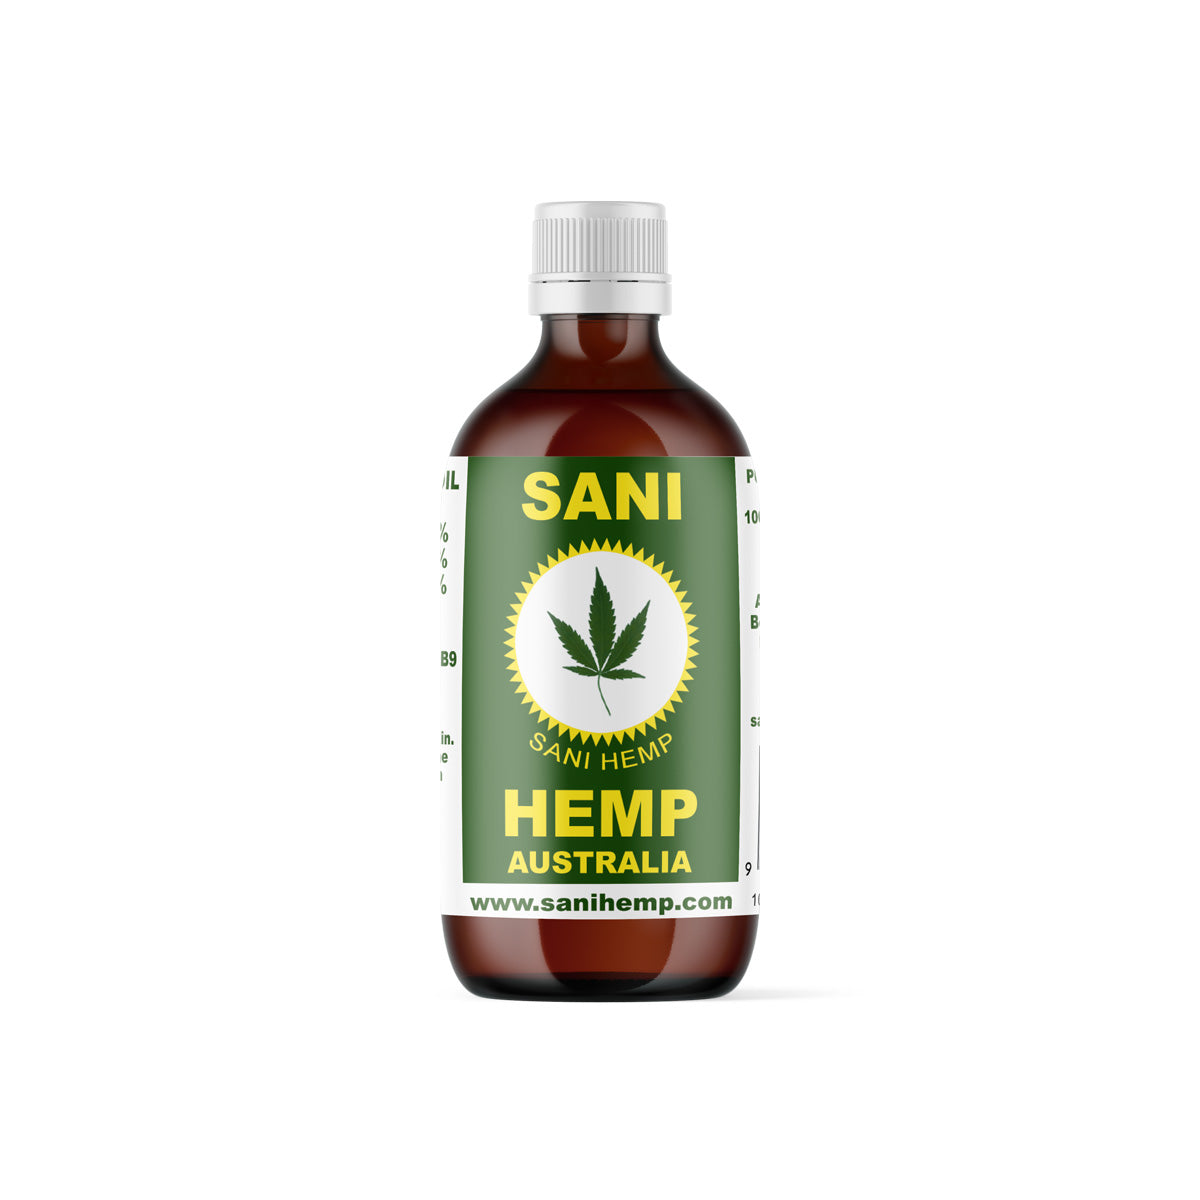 Sani Hemp Gold Seed Oil - 100ml